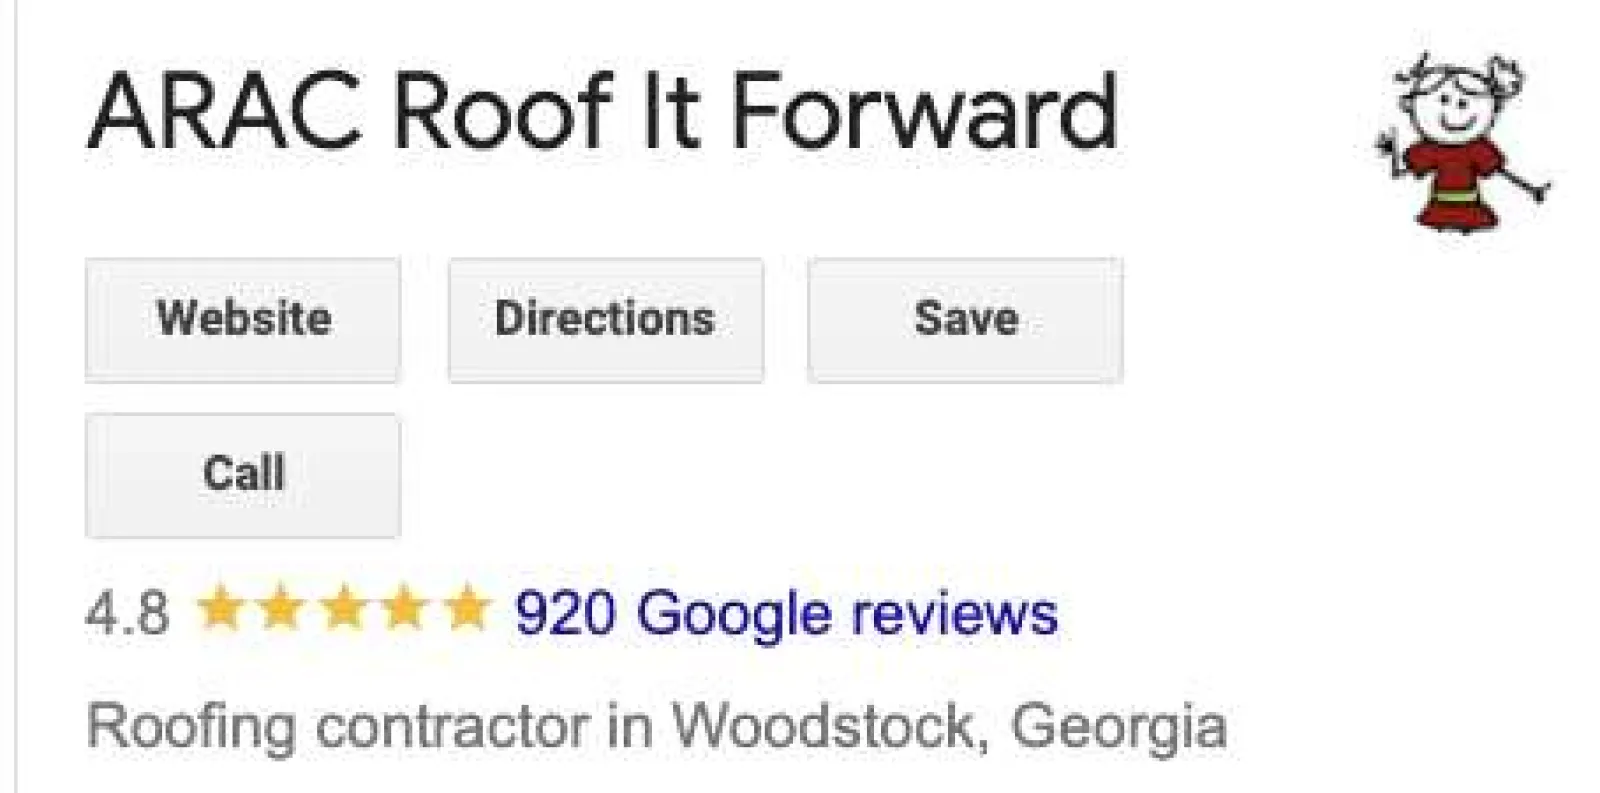 ARAC Roof It Forward's Atlanta market has over 900 Google Reviews with a 4.8 Rating